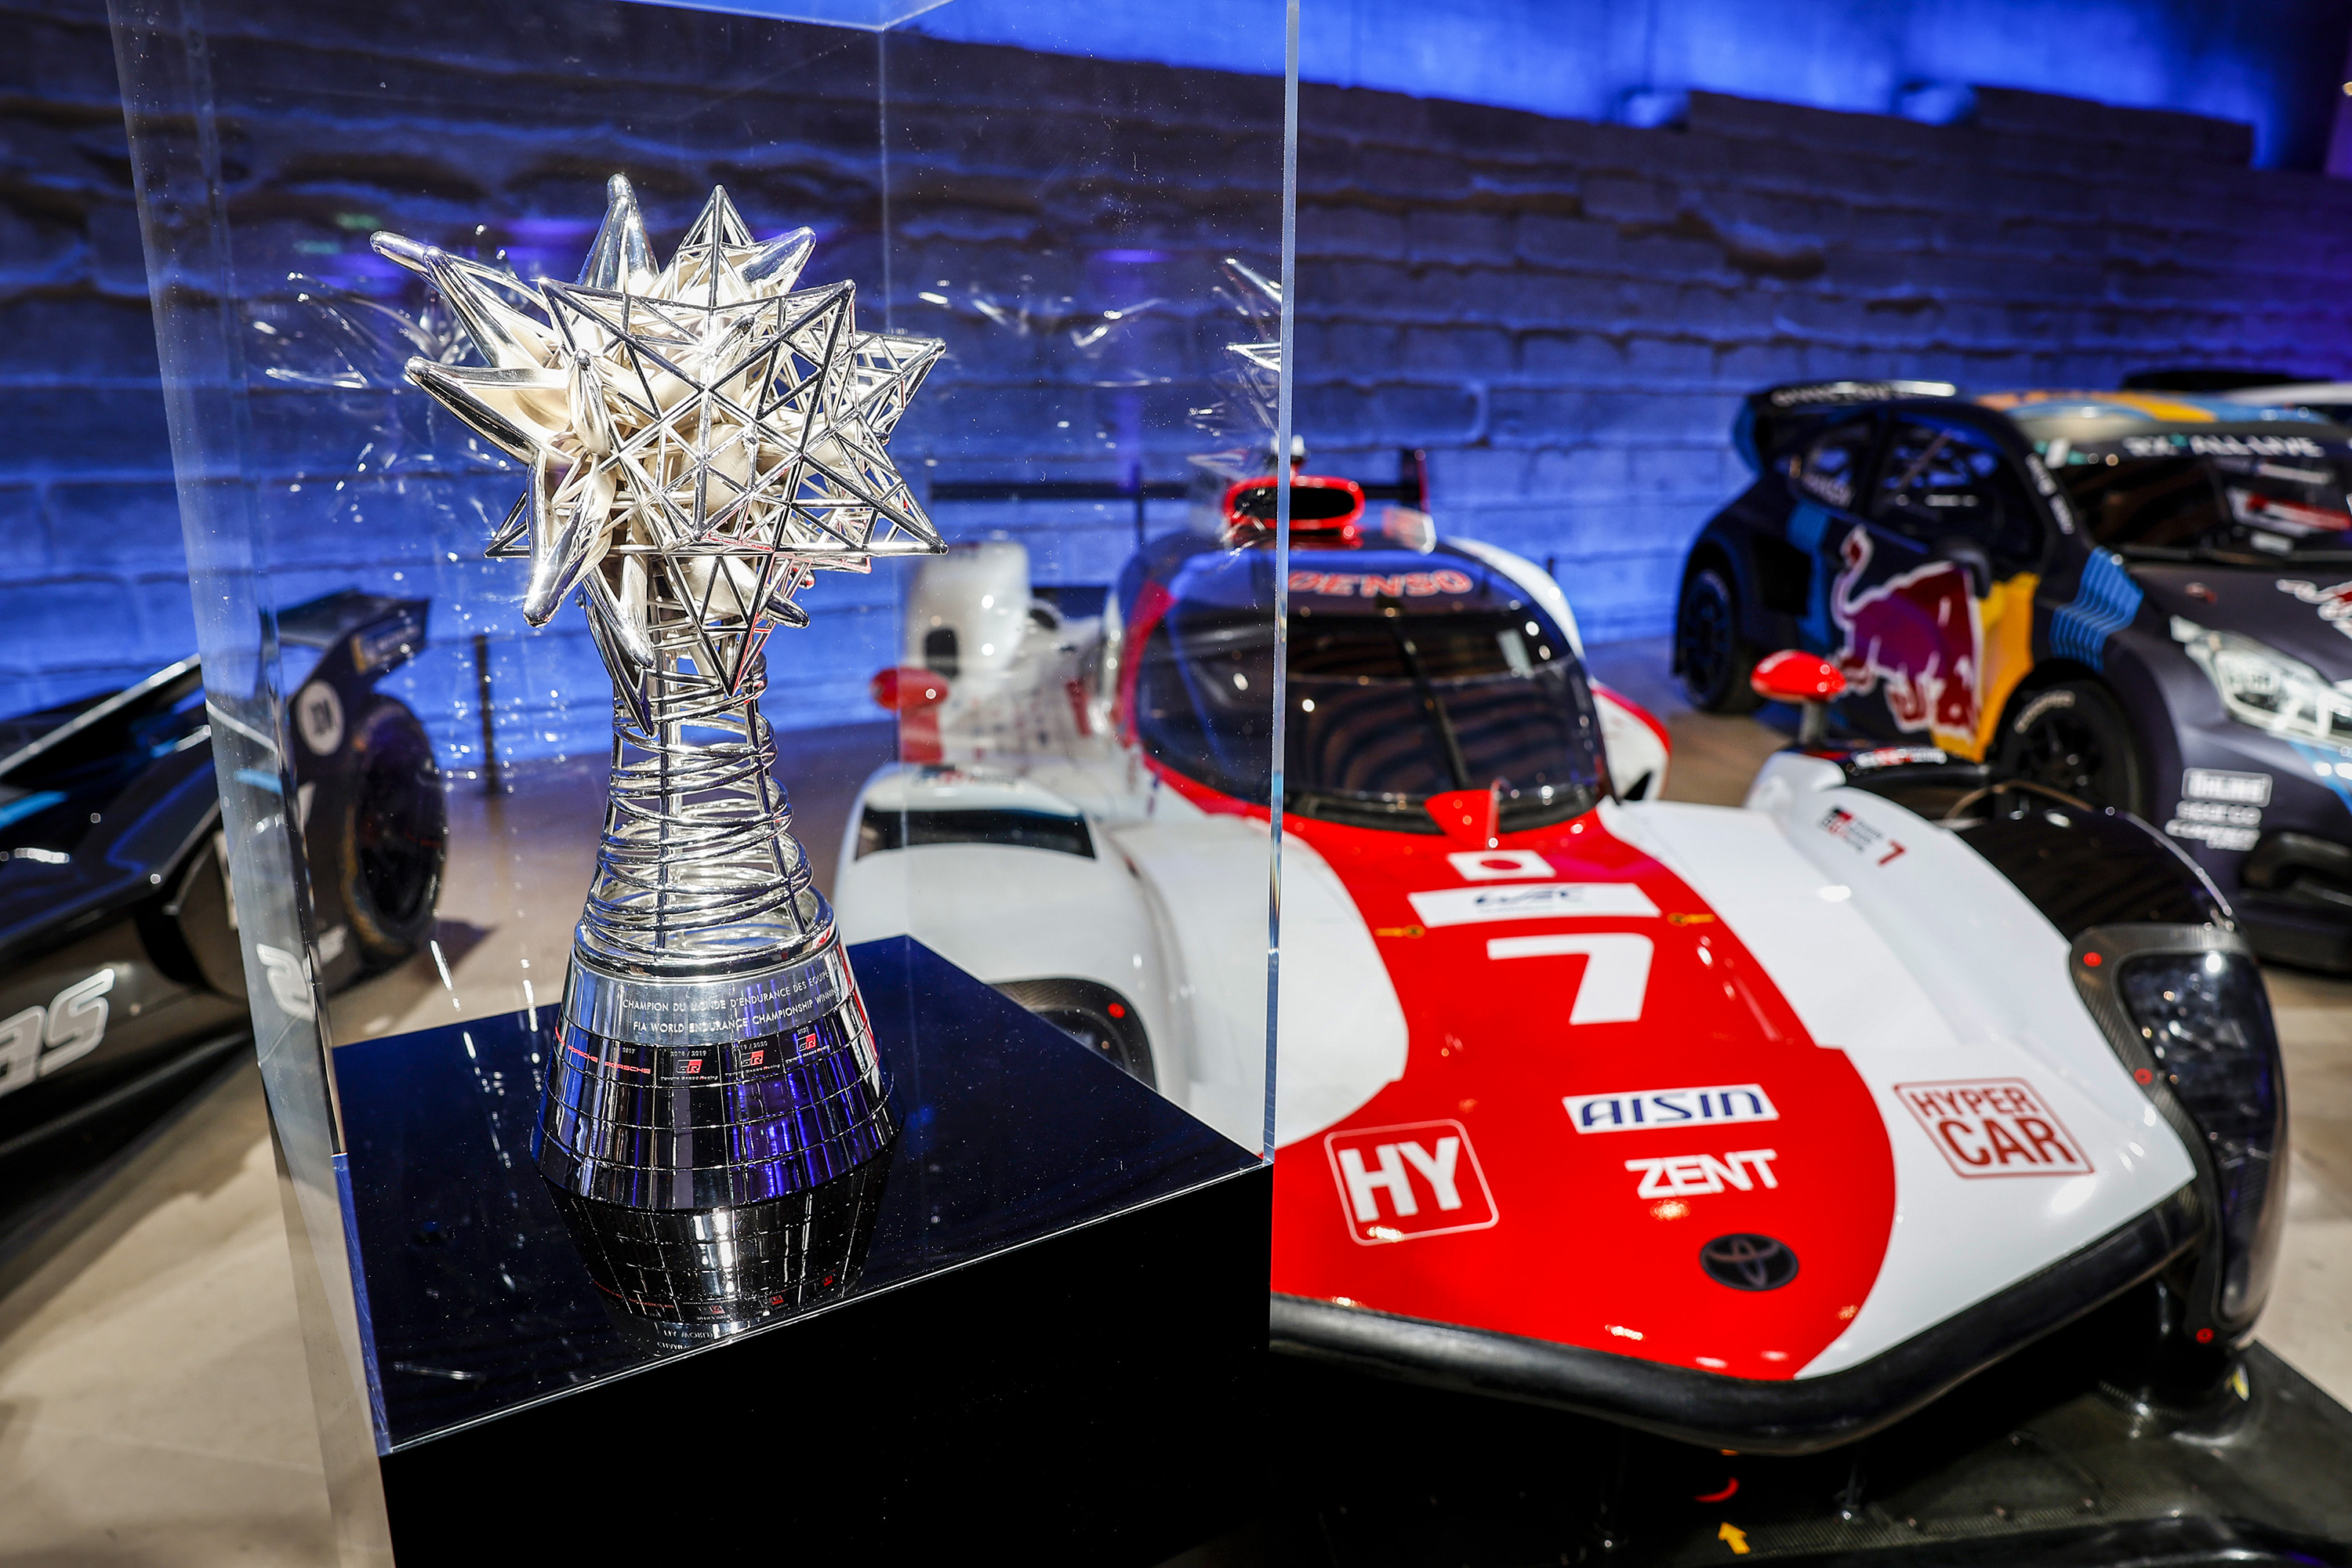 WEC: 2021 FIA World Endurance Championship is Go!